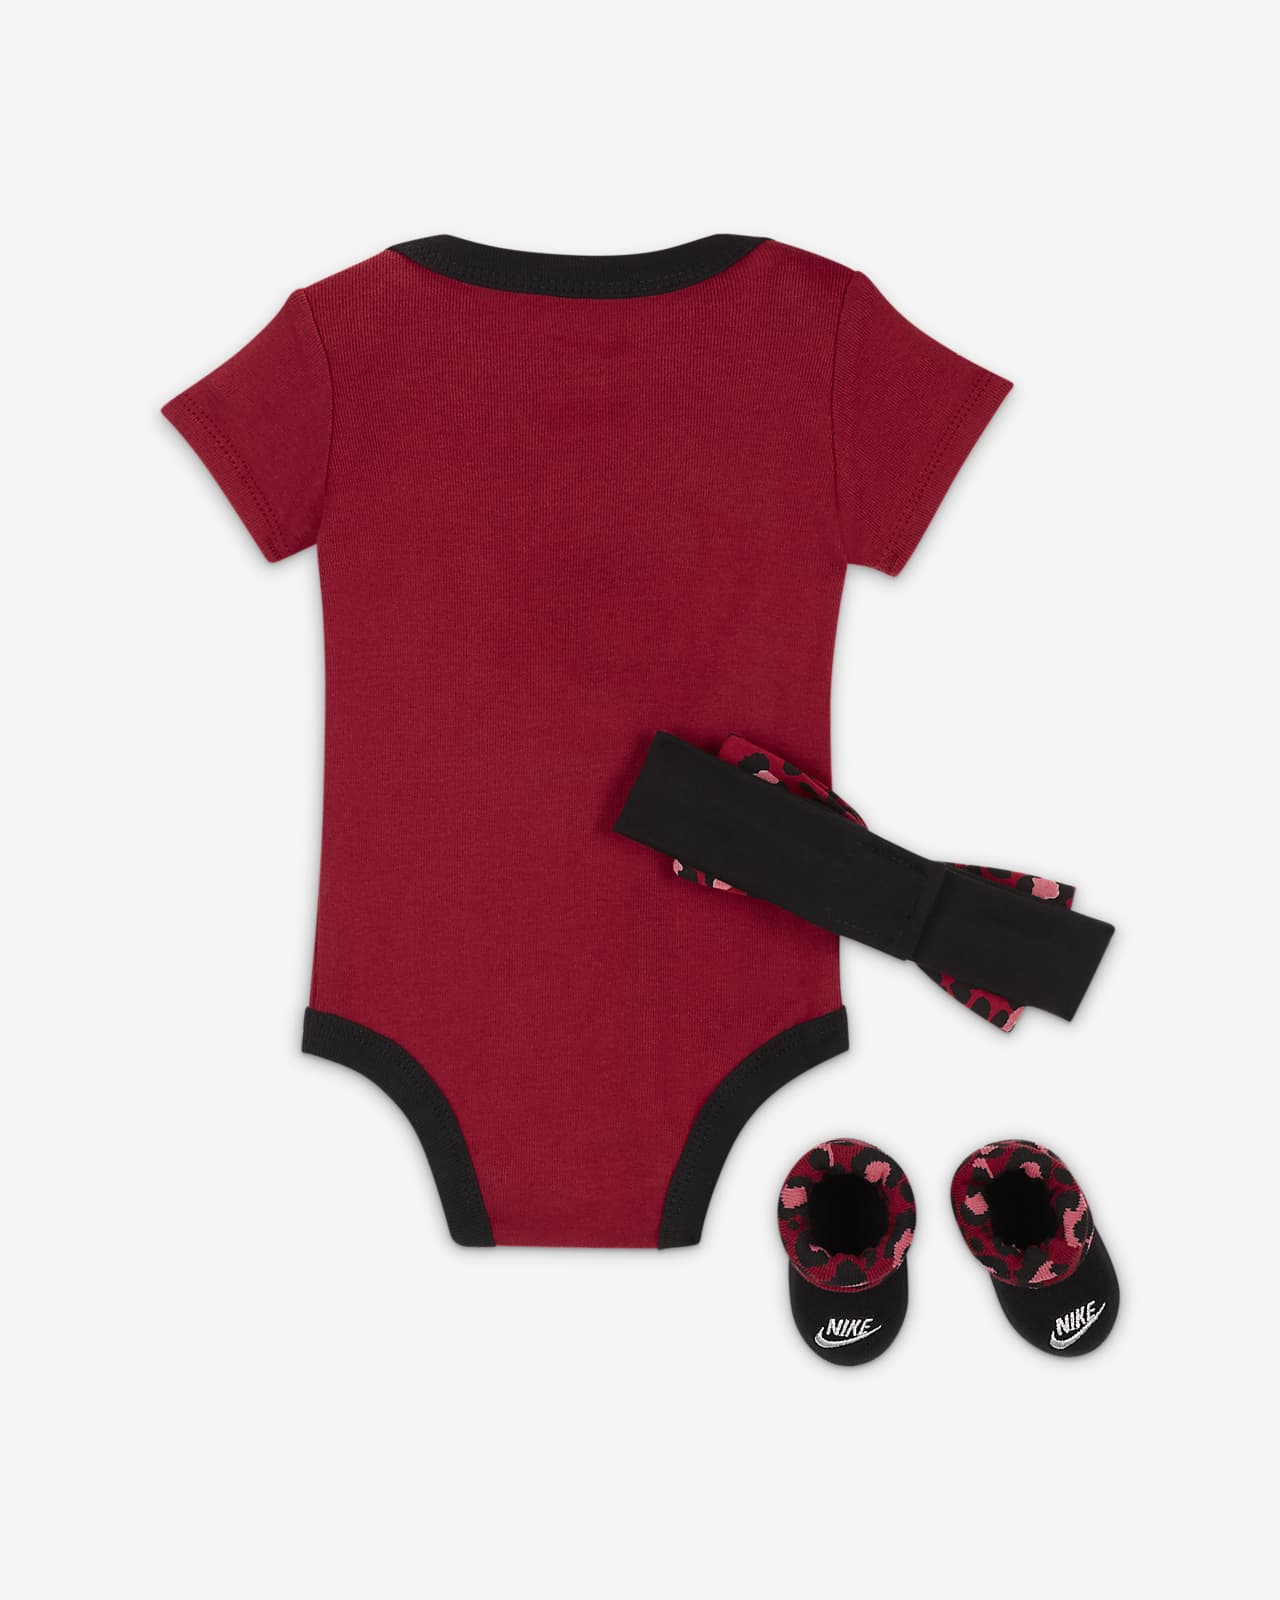 Baby Box Nike Set. 3-Piece